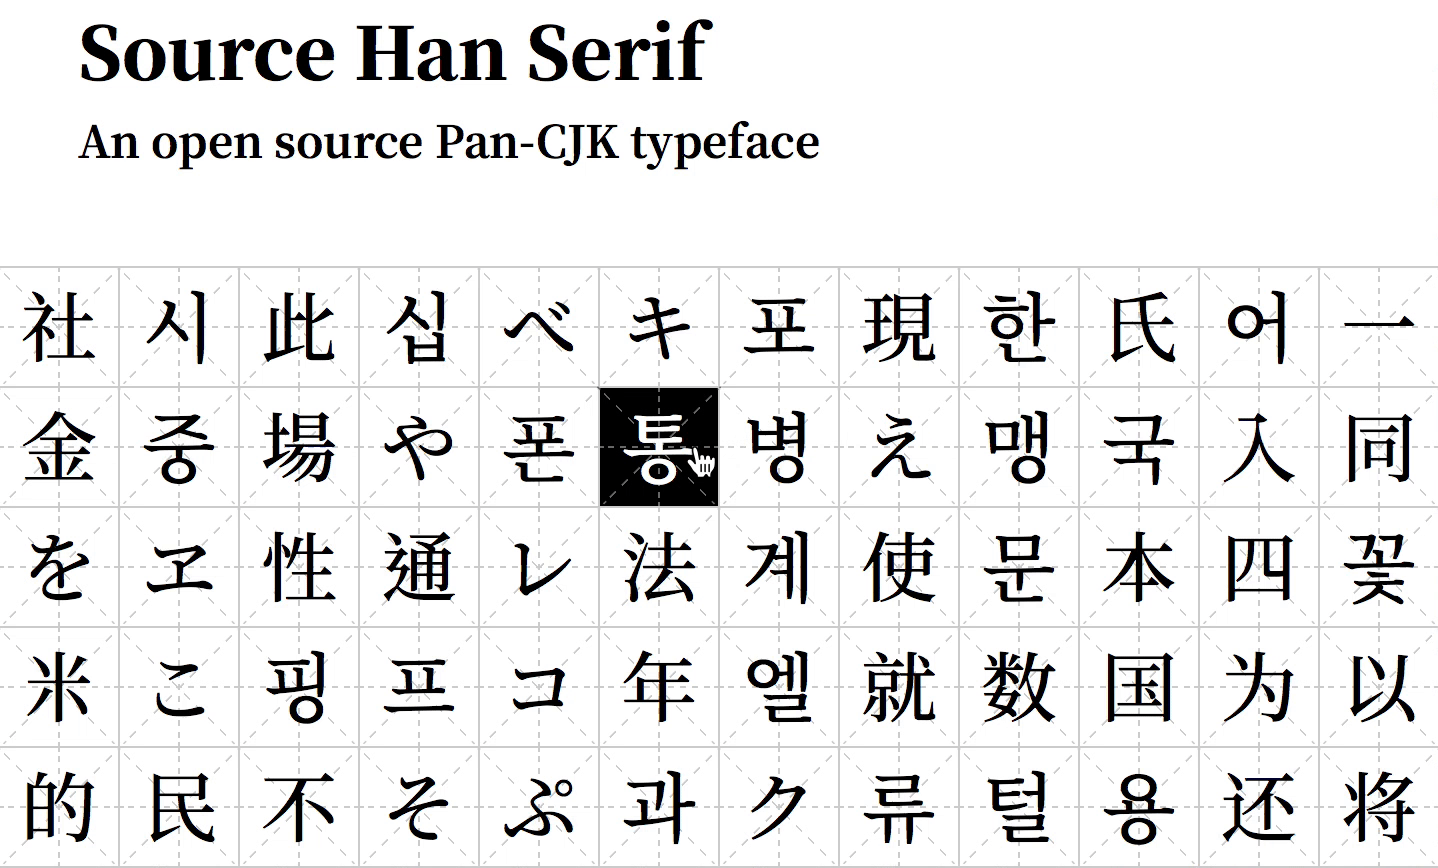 Interactive glyph wall on Source Han Serif website